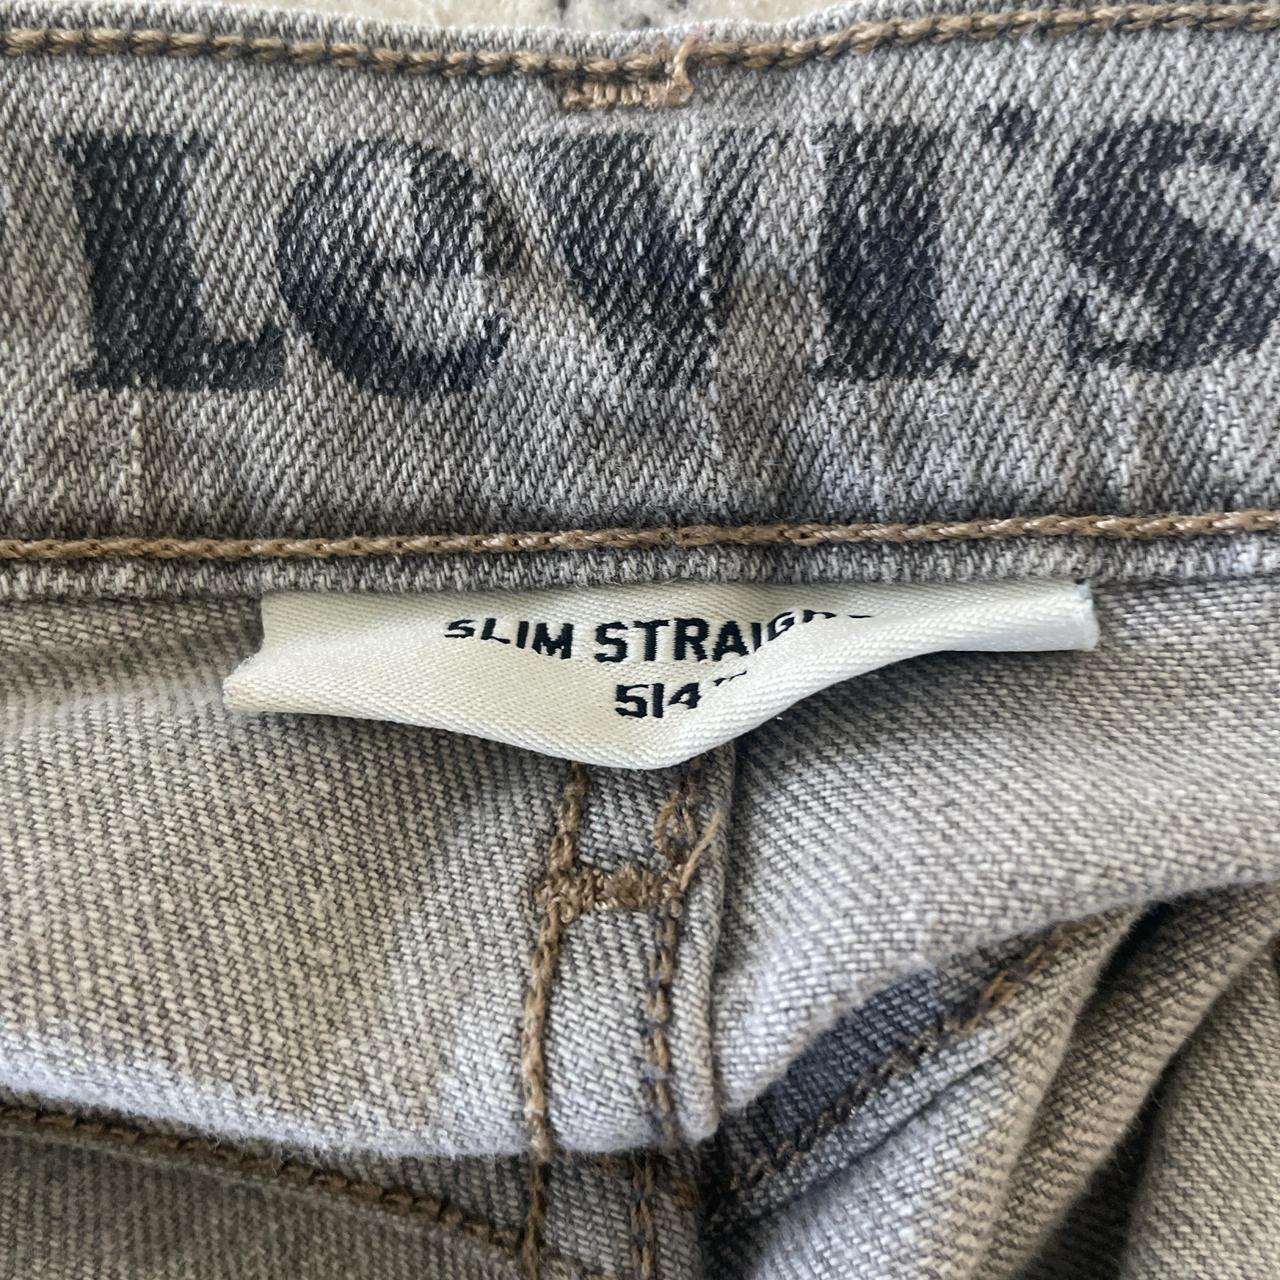 Levi's jeans #vintage #denim (31x32) - Depop